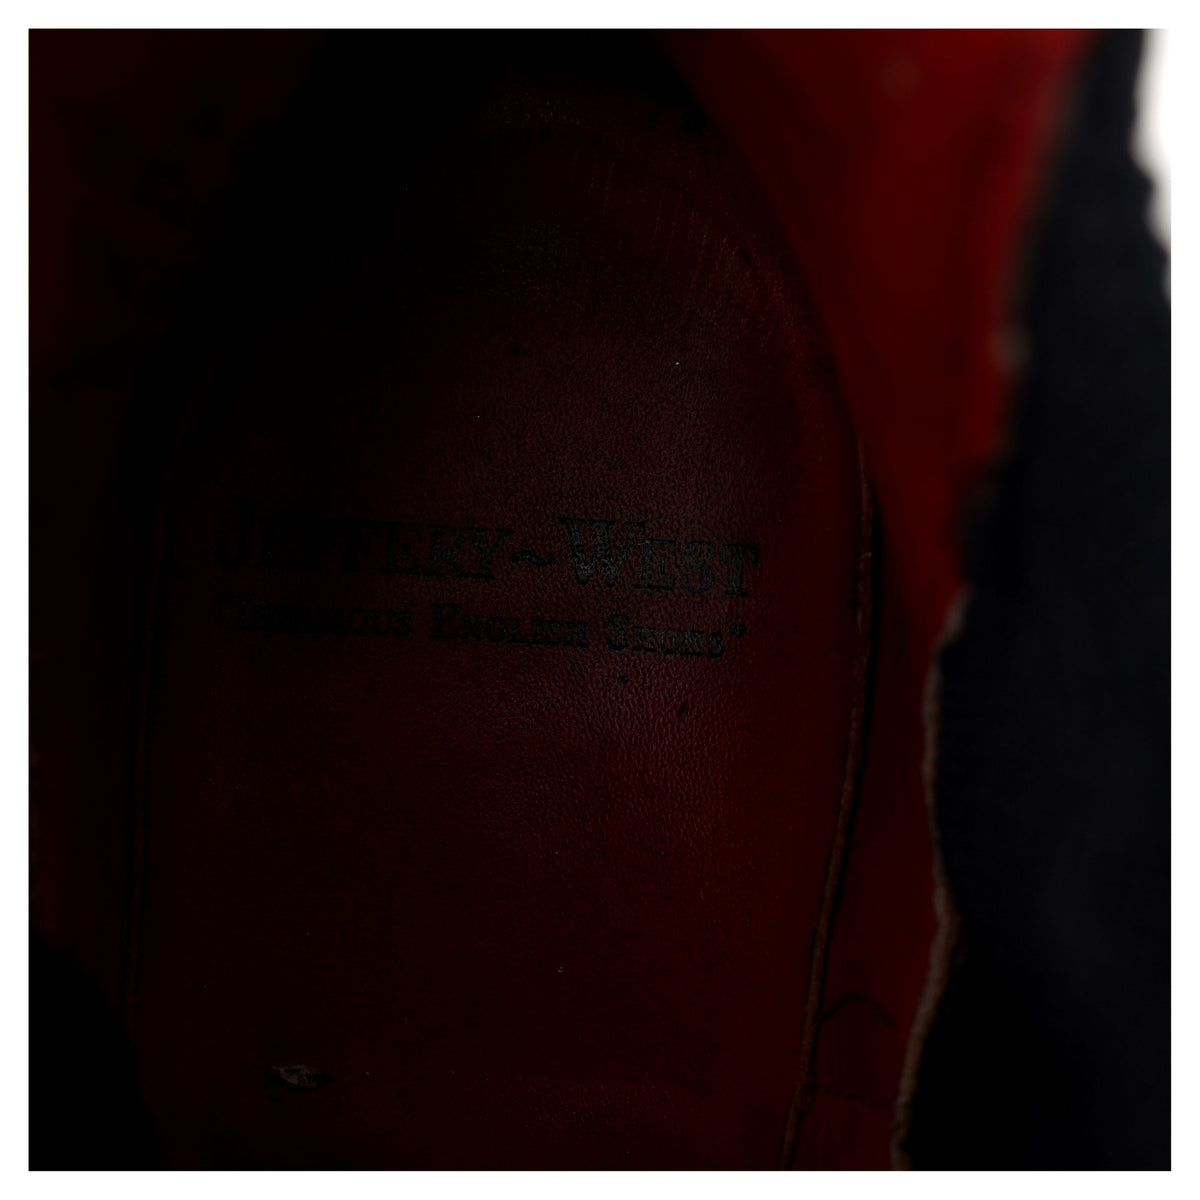 Women&#39;s Black Leather Chelsea Boots UK 6